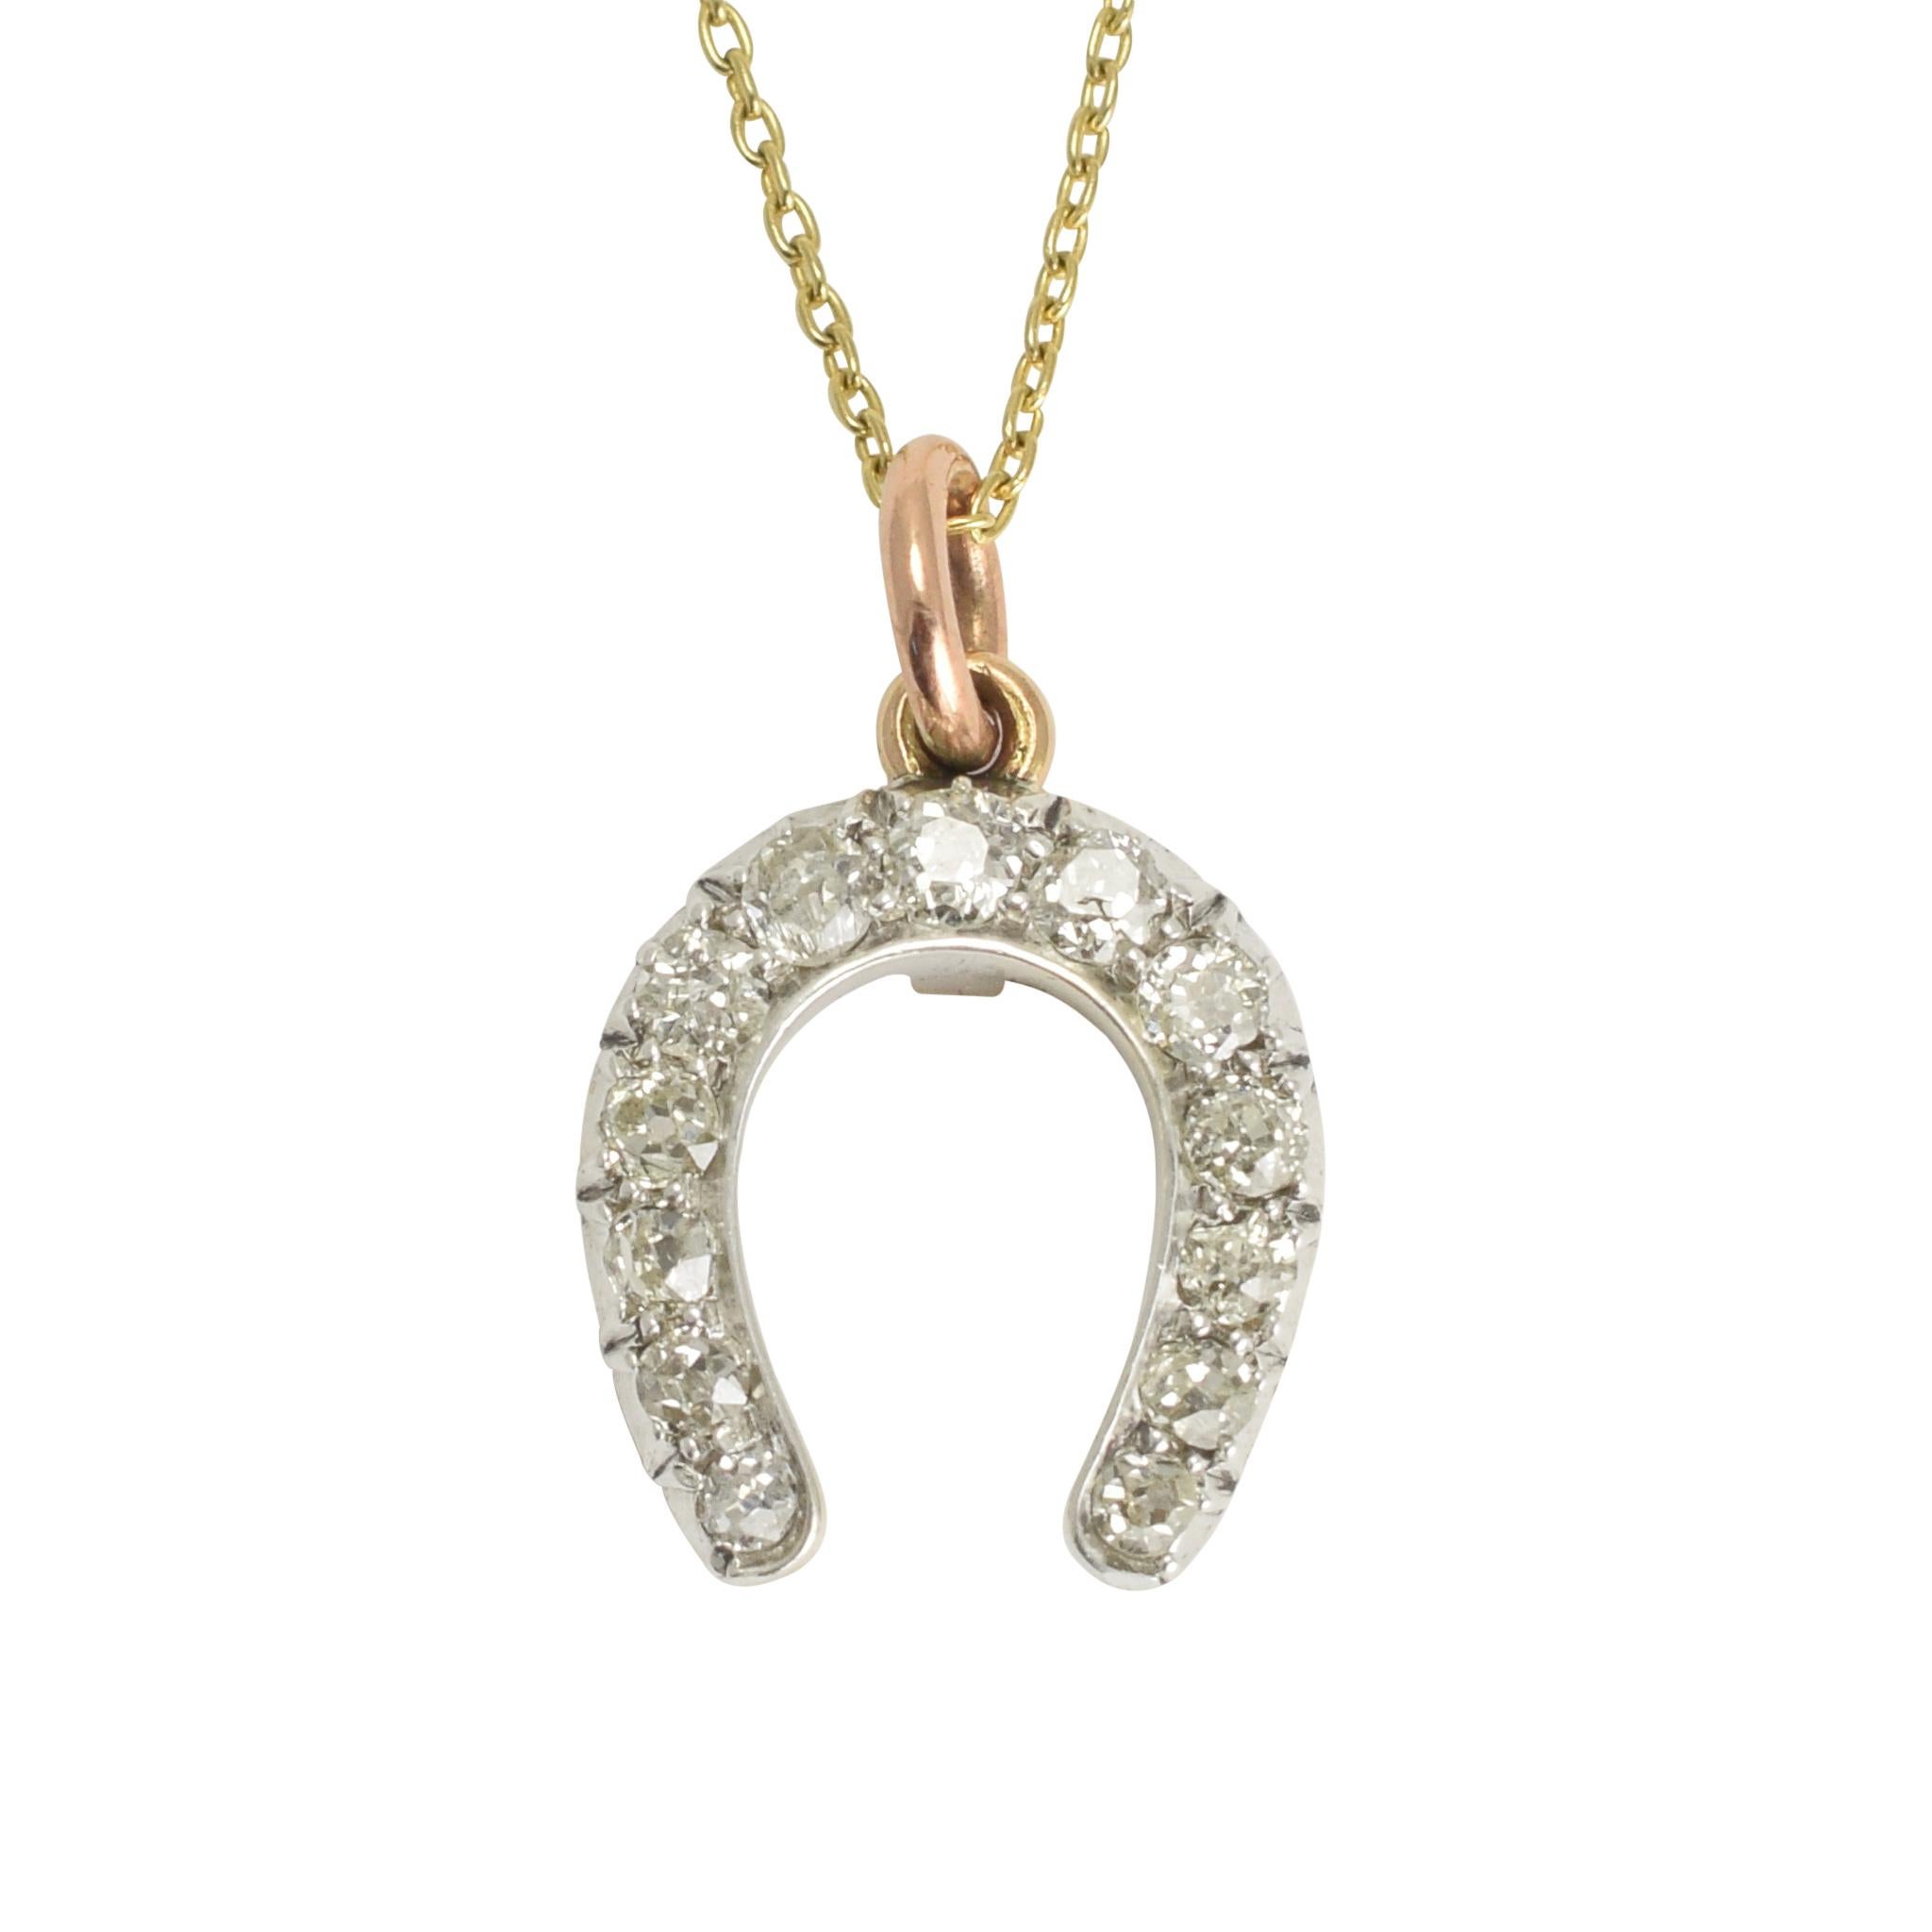 Antique Victorian Diamond Horseshoe Pendant Necklace